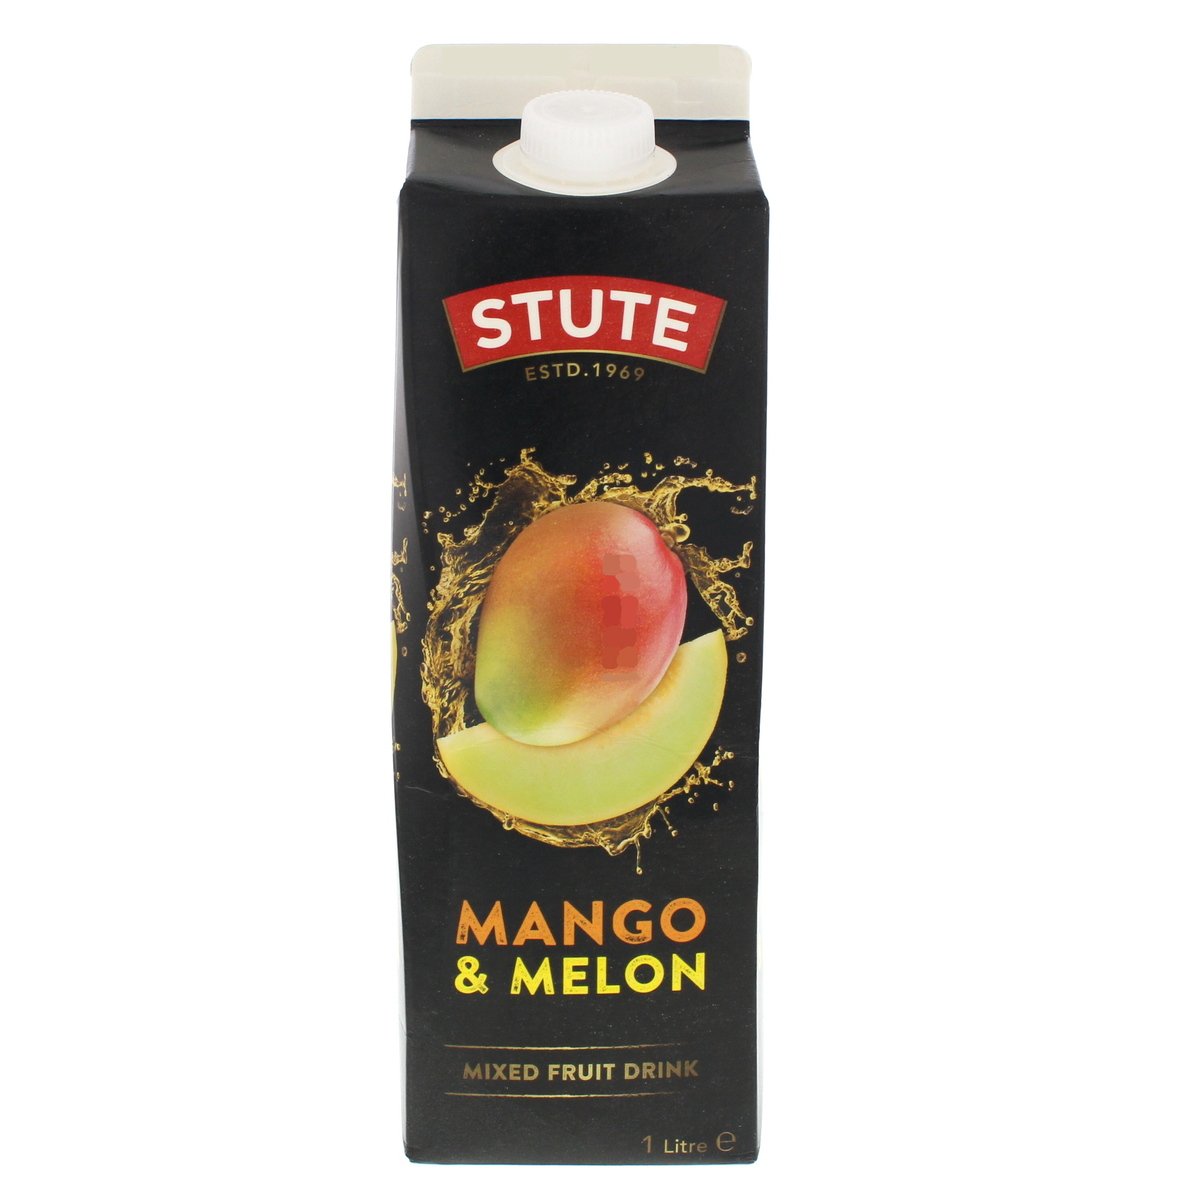 Stute Mango & Melon Mixed Fruit Drink 1 Litre